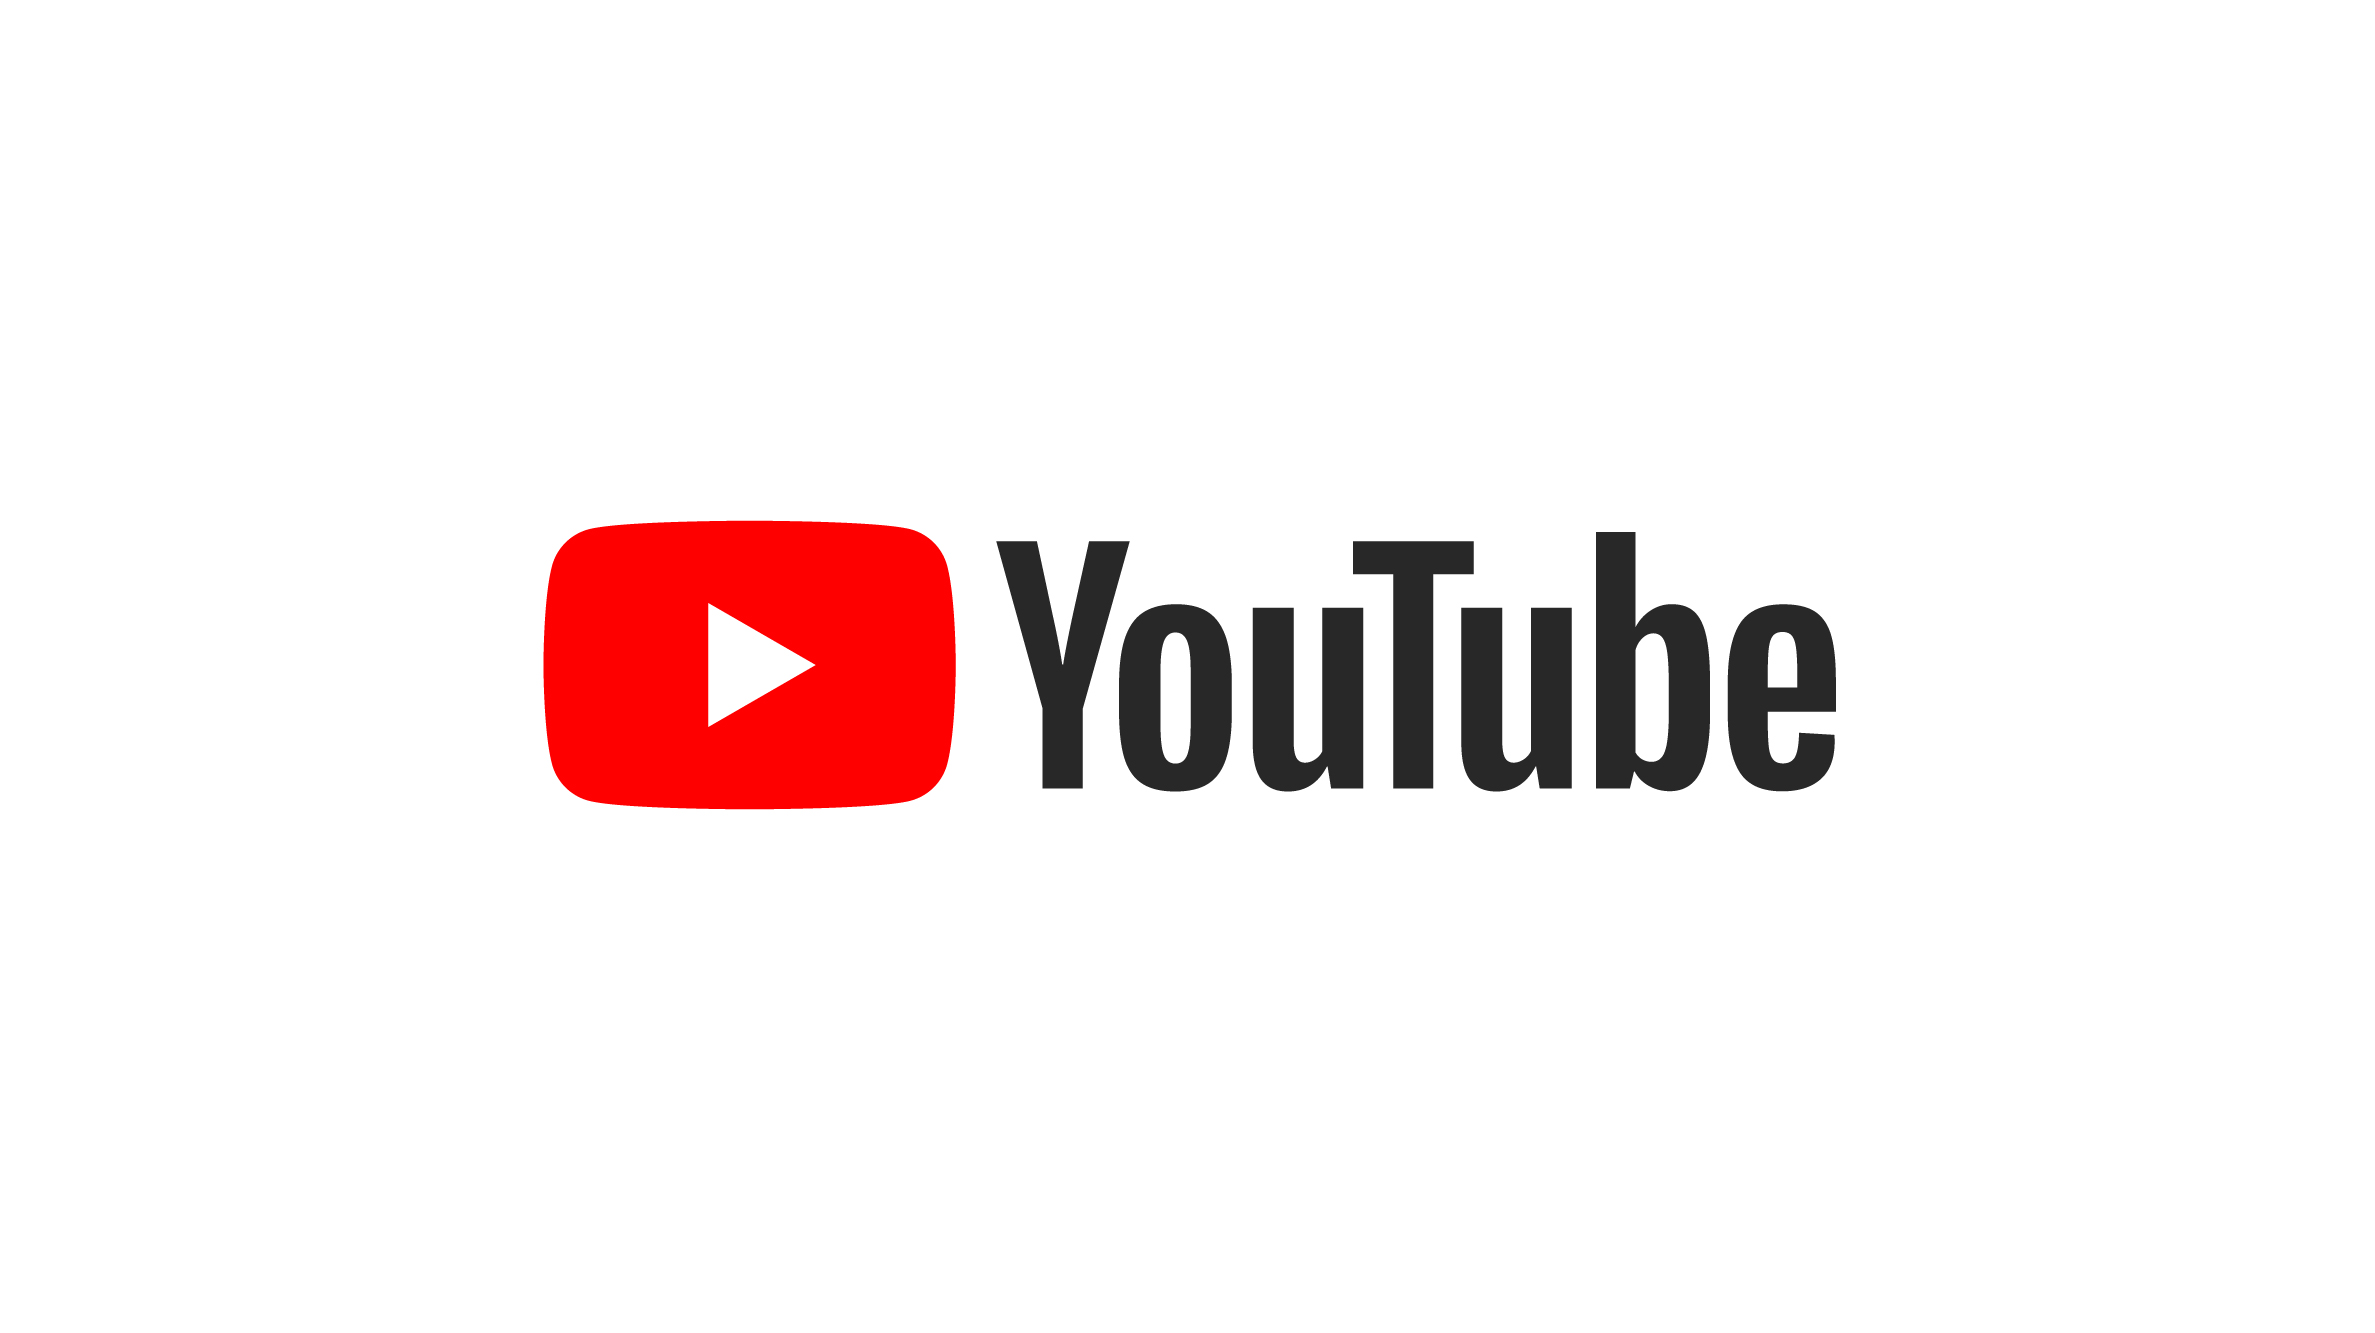 Youtube video-sharing mobile platform